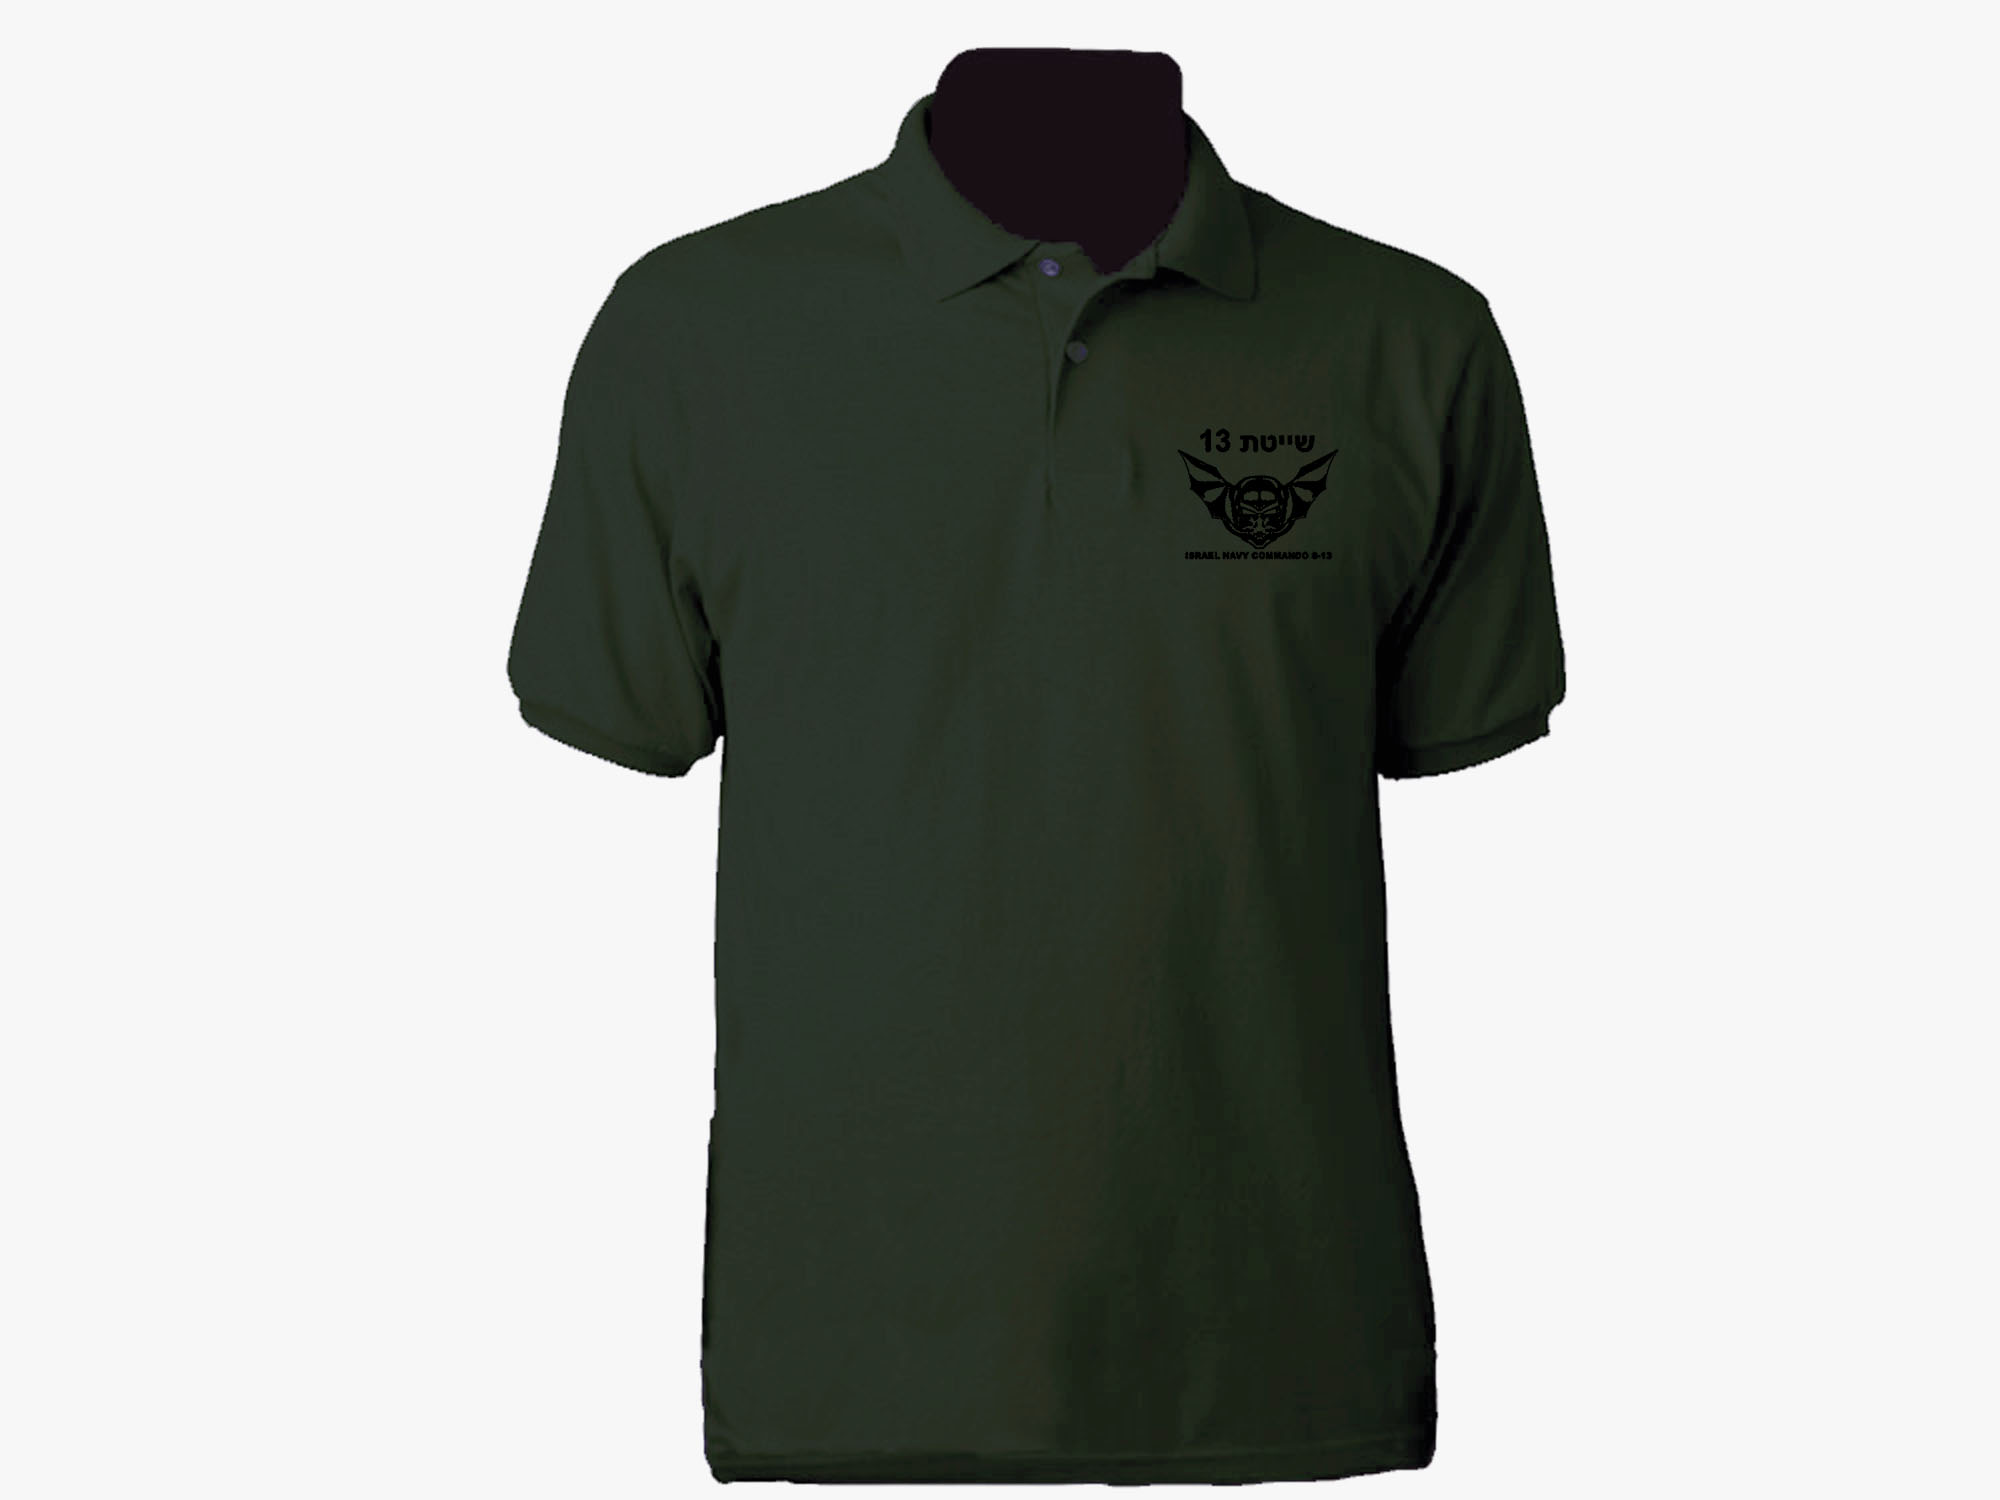 Israel Navy Seals Commando Unit S-13 sweat proof polo style t-shirt